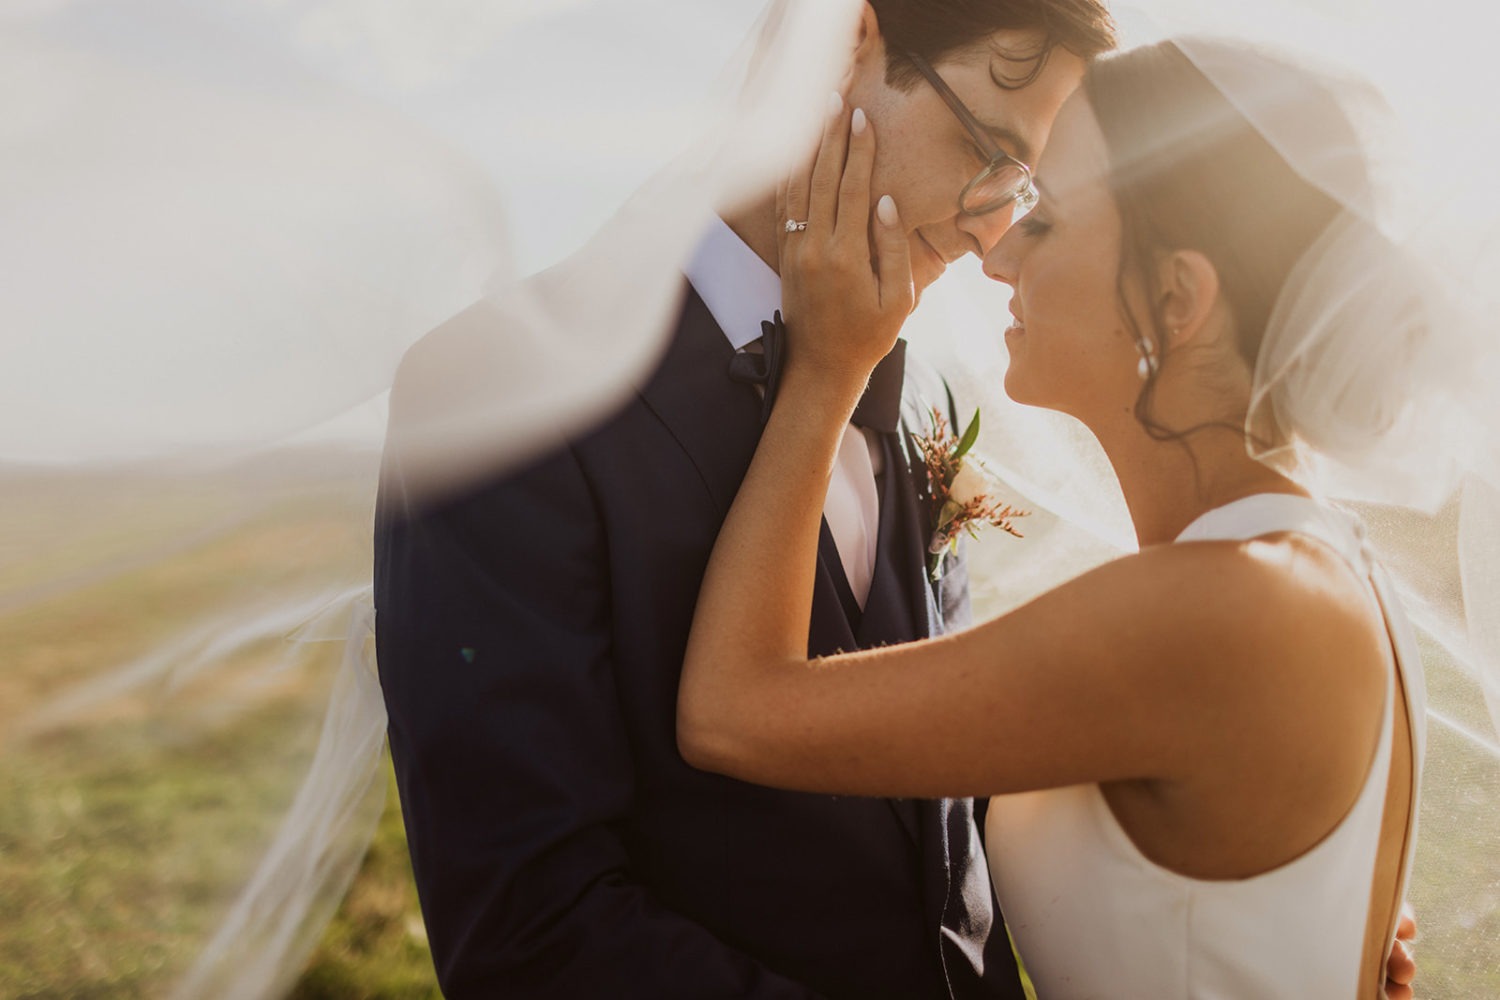 couple kisses underneath veild at wedding ranch venue